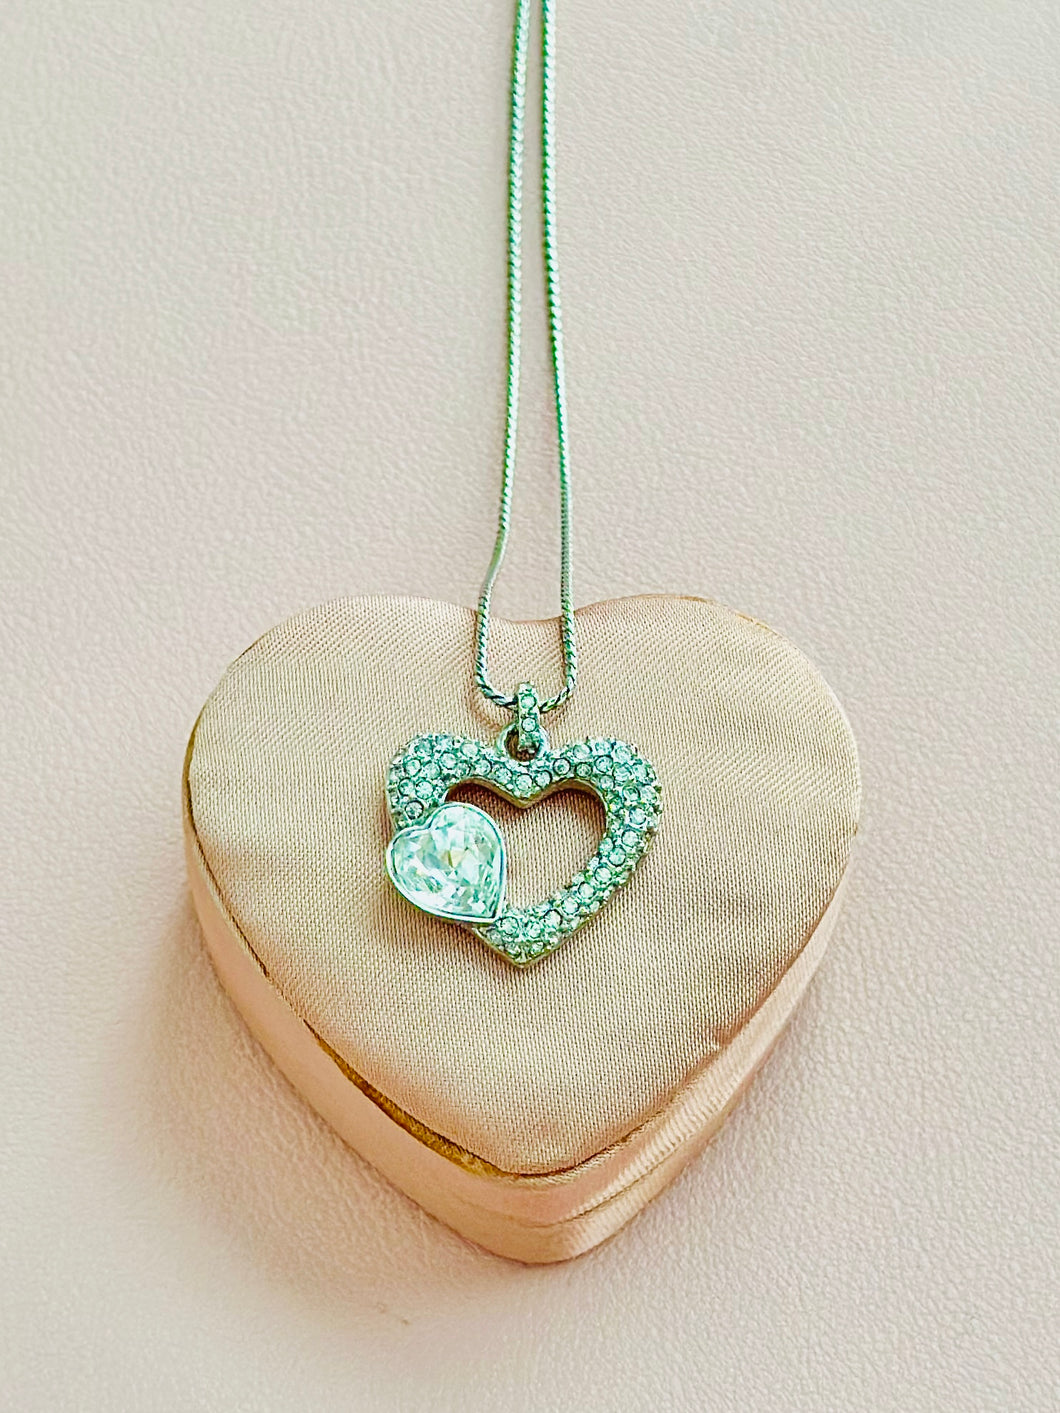 Vintage SWAROVSKI heart pendant necklace